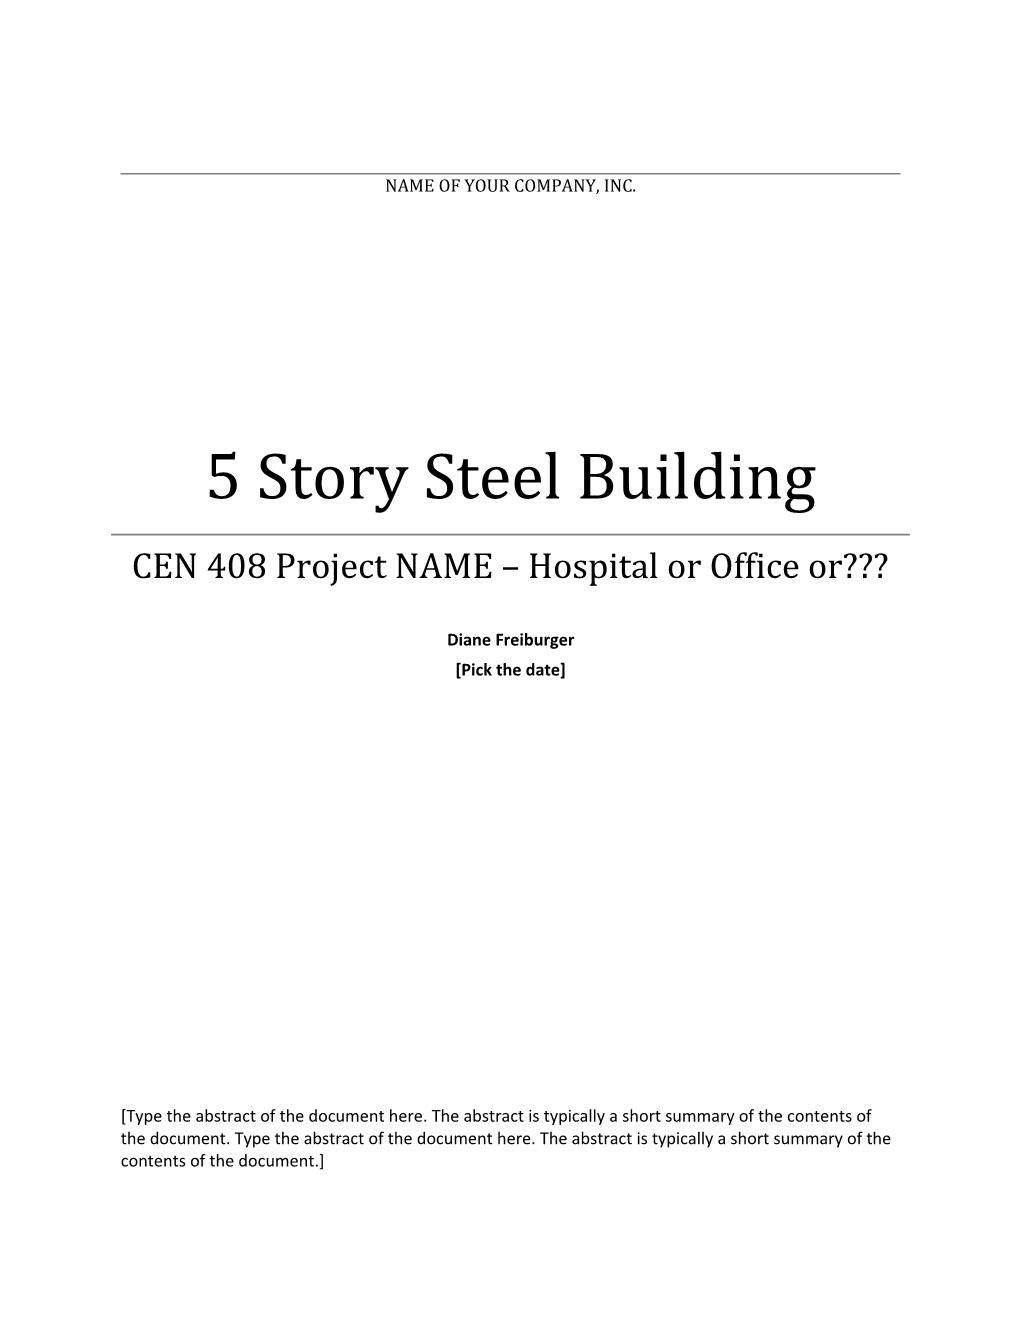 5 Story Steel Building